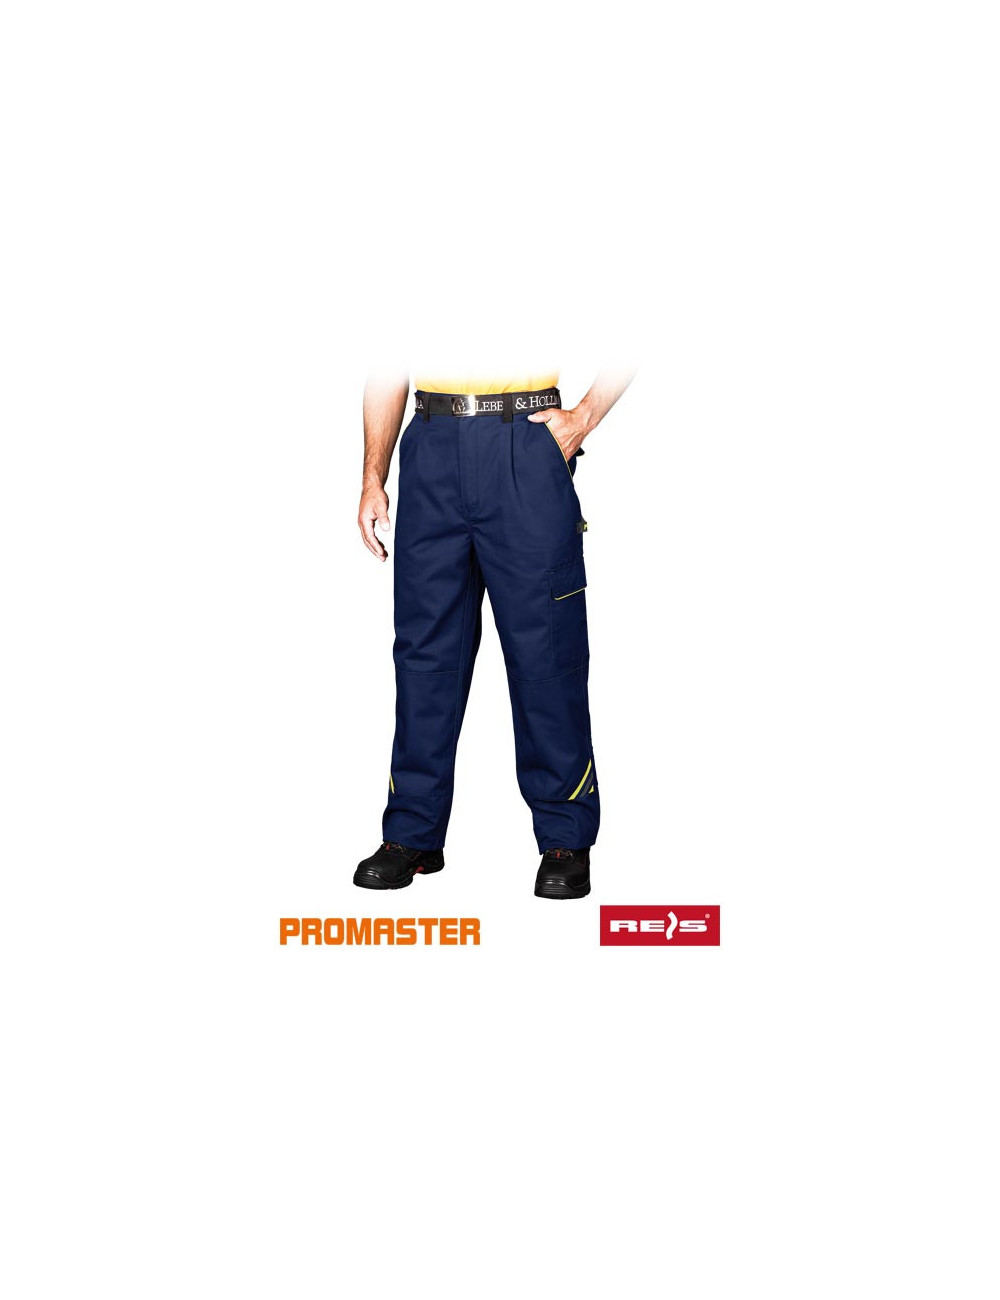 Pro-t waist trousers gys navy-yellow-gray Reis